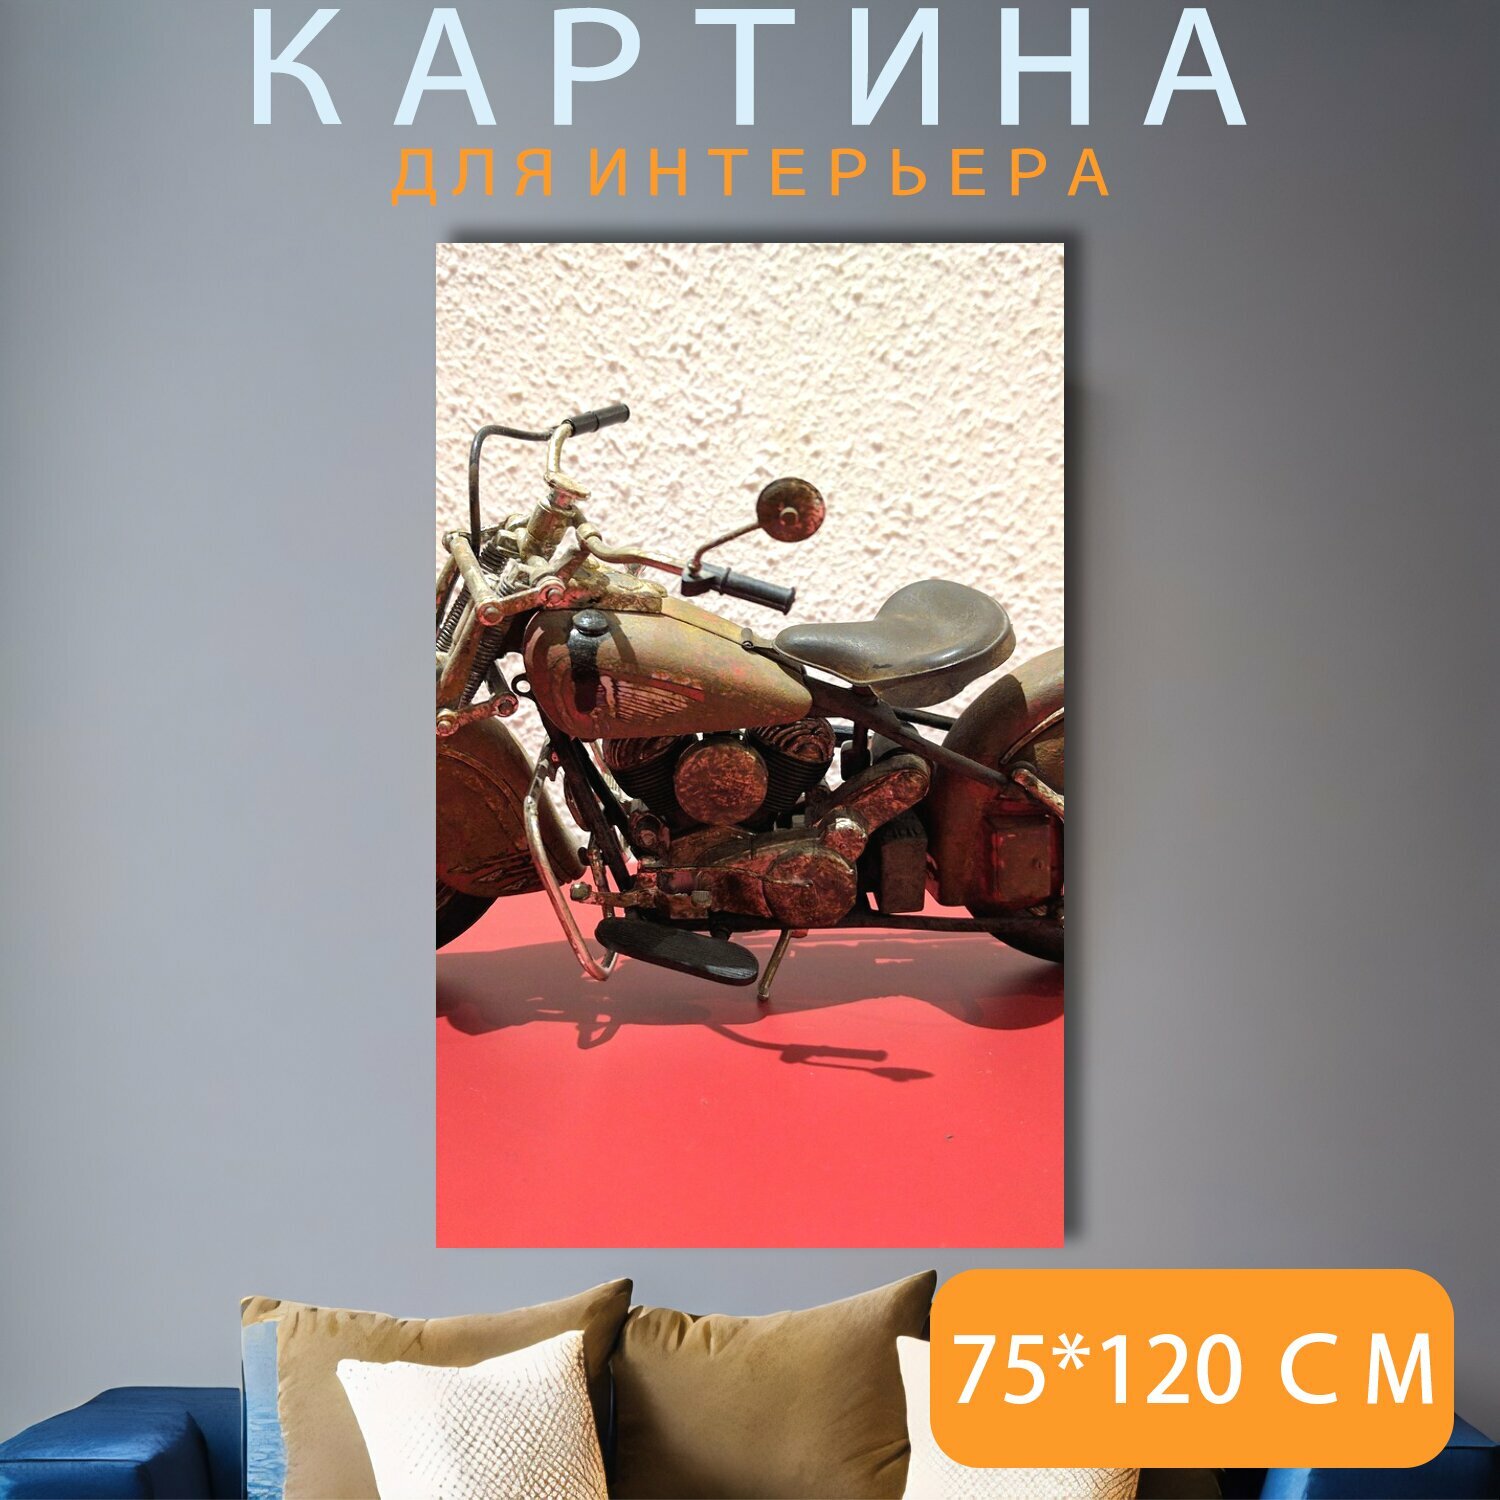 Картина на холсте "Мотоцикл, миниатюра, мото" на подрамнике 75х120 см. для интерьера